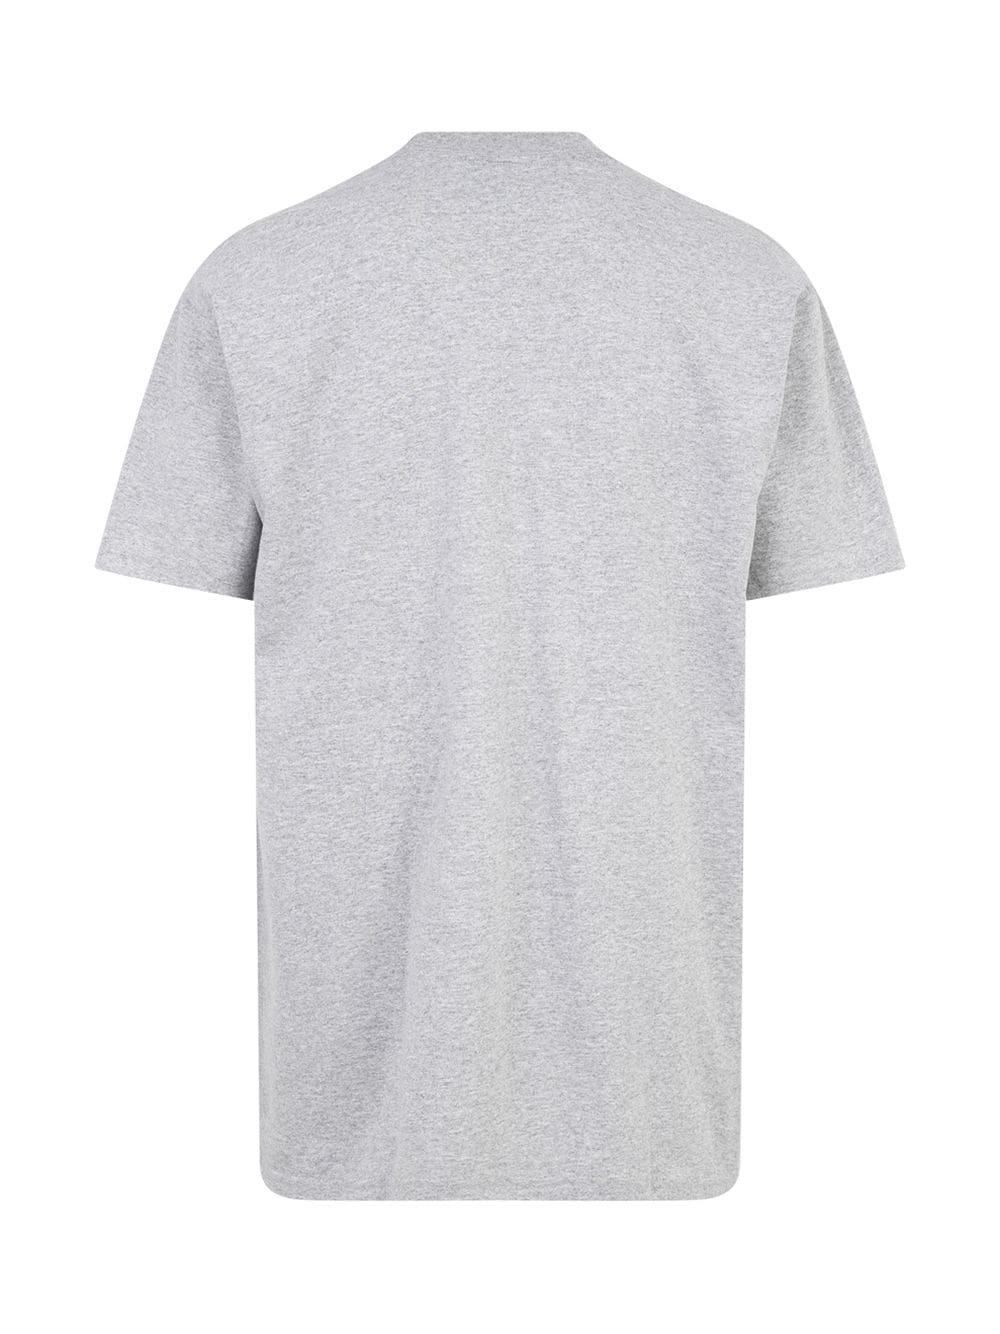 Supreme x Emilio Pucci T-shirt met logo - Grijs